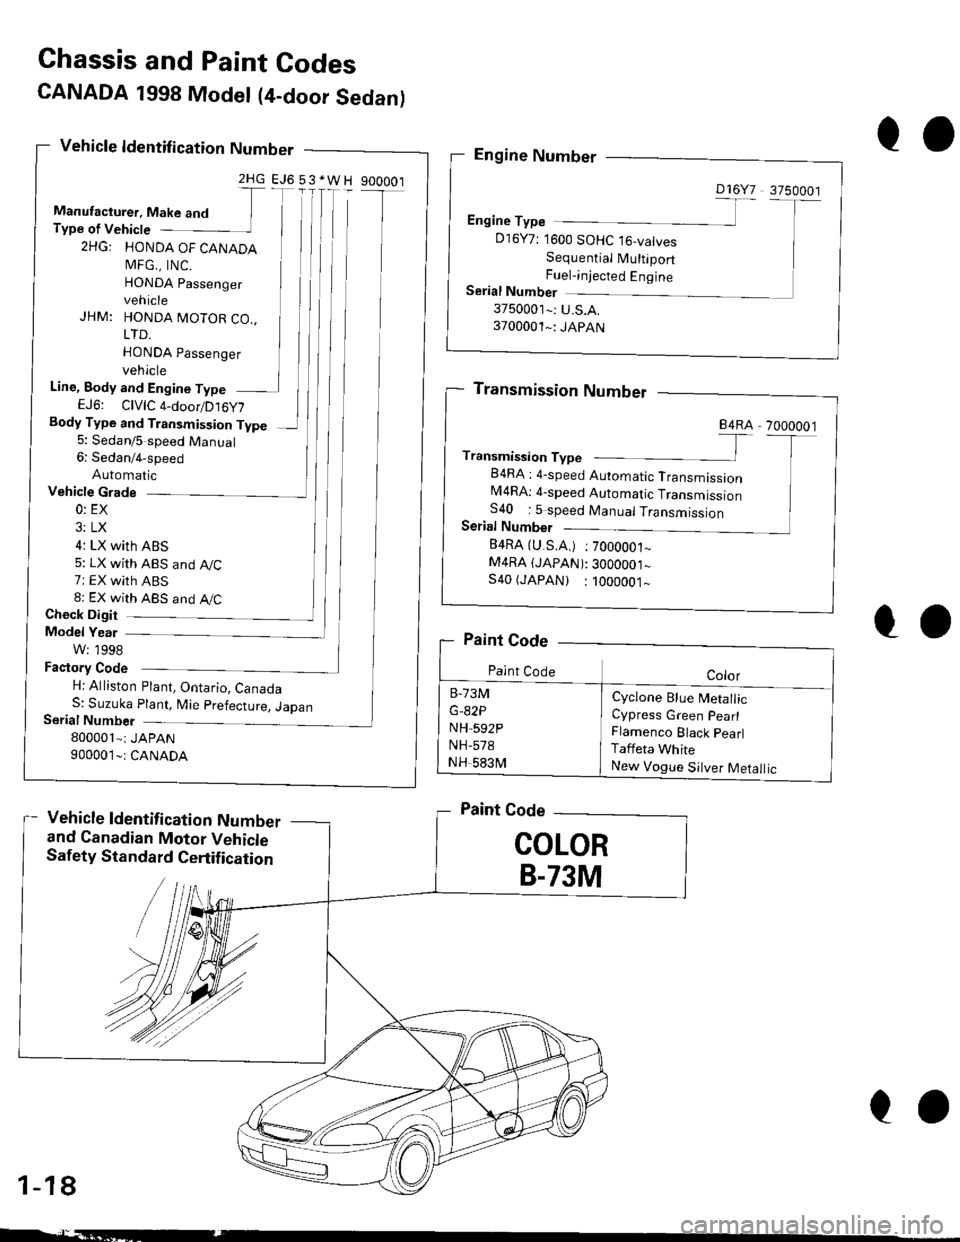 HONDA CIVIC 1999 6.G User Guide CANADA 1998 Model (4-door Sedanl
Vehicle ldentification Number
Chassis and Paint Codes
2HG.I
Manufacturer, Make andType of Vehicte I2HG: HONDA OF CANADA ]MFG,, INC.
HONDA passenger lvehicle
JHM: HONDA